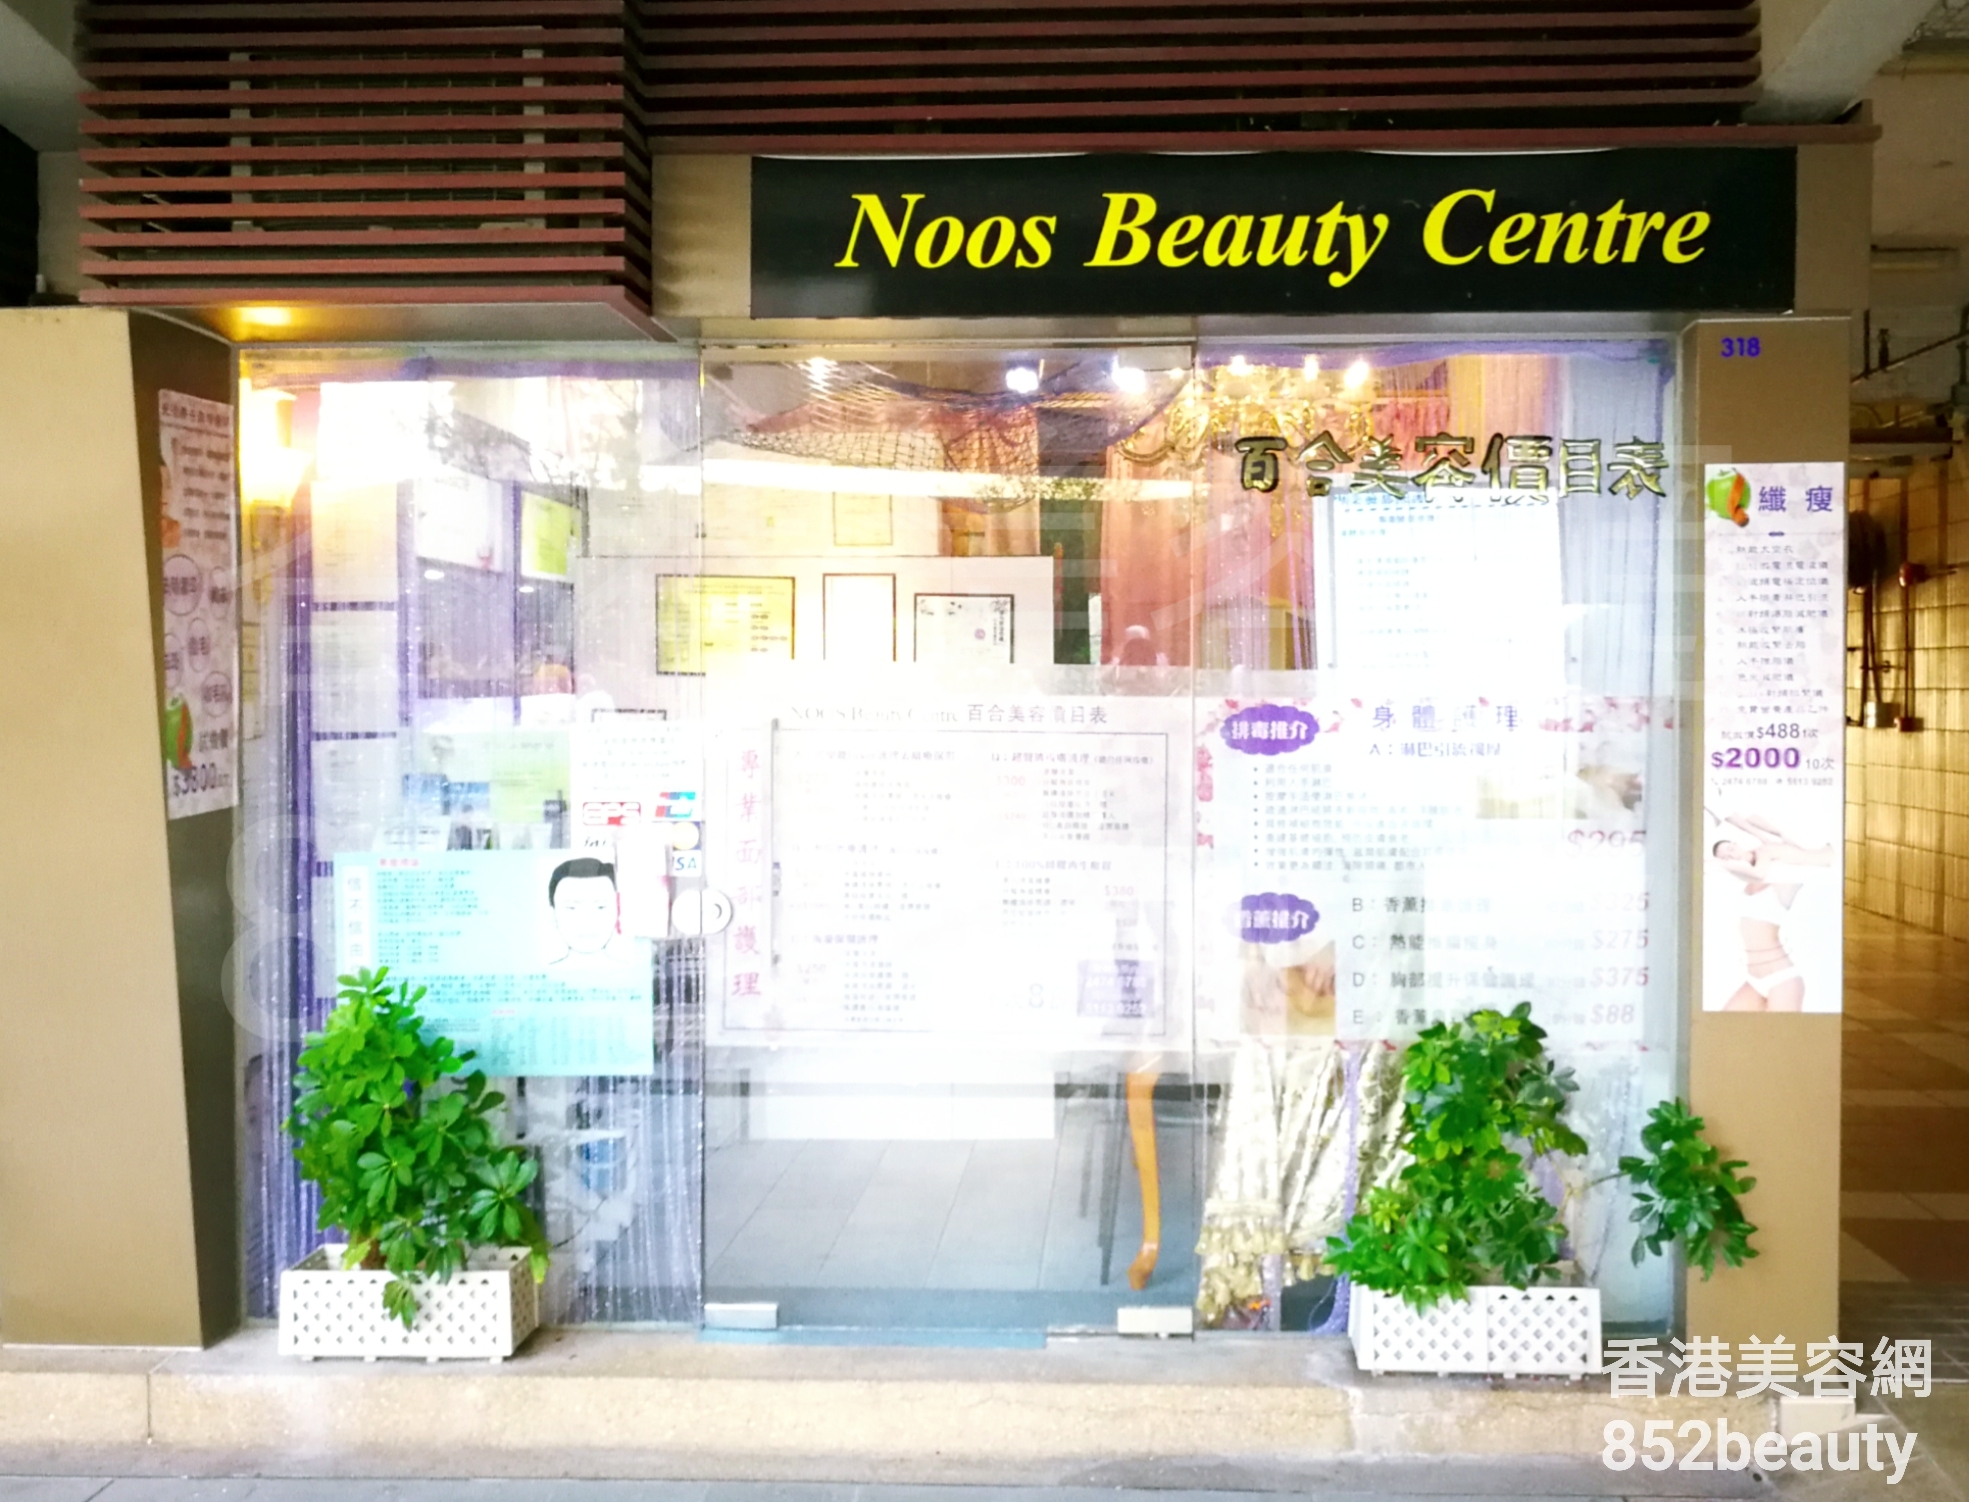 Facial Care: Noos Beauty Centre